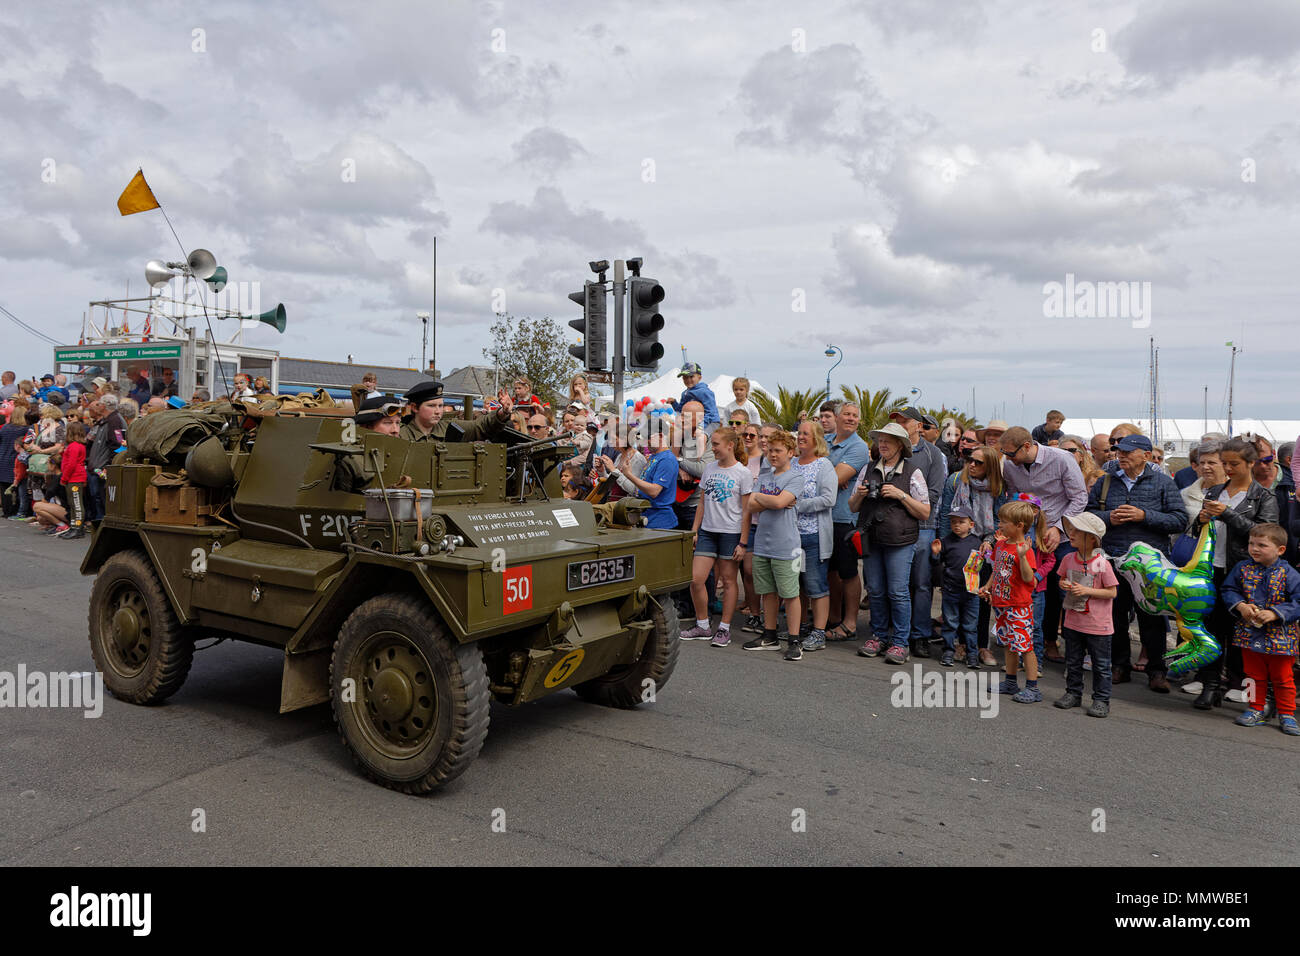 Daimler Dingo military vehicle at Guernseys Liberation Day Parade Stock Photo